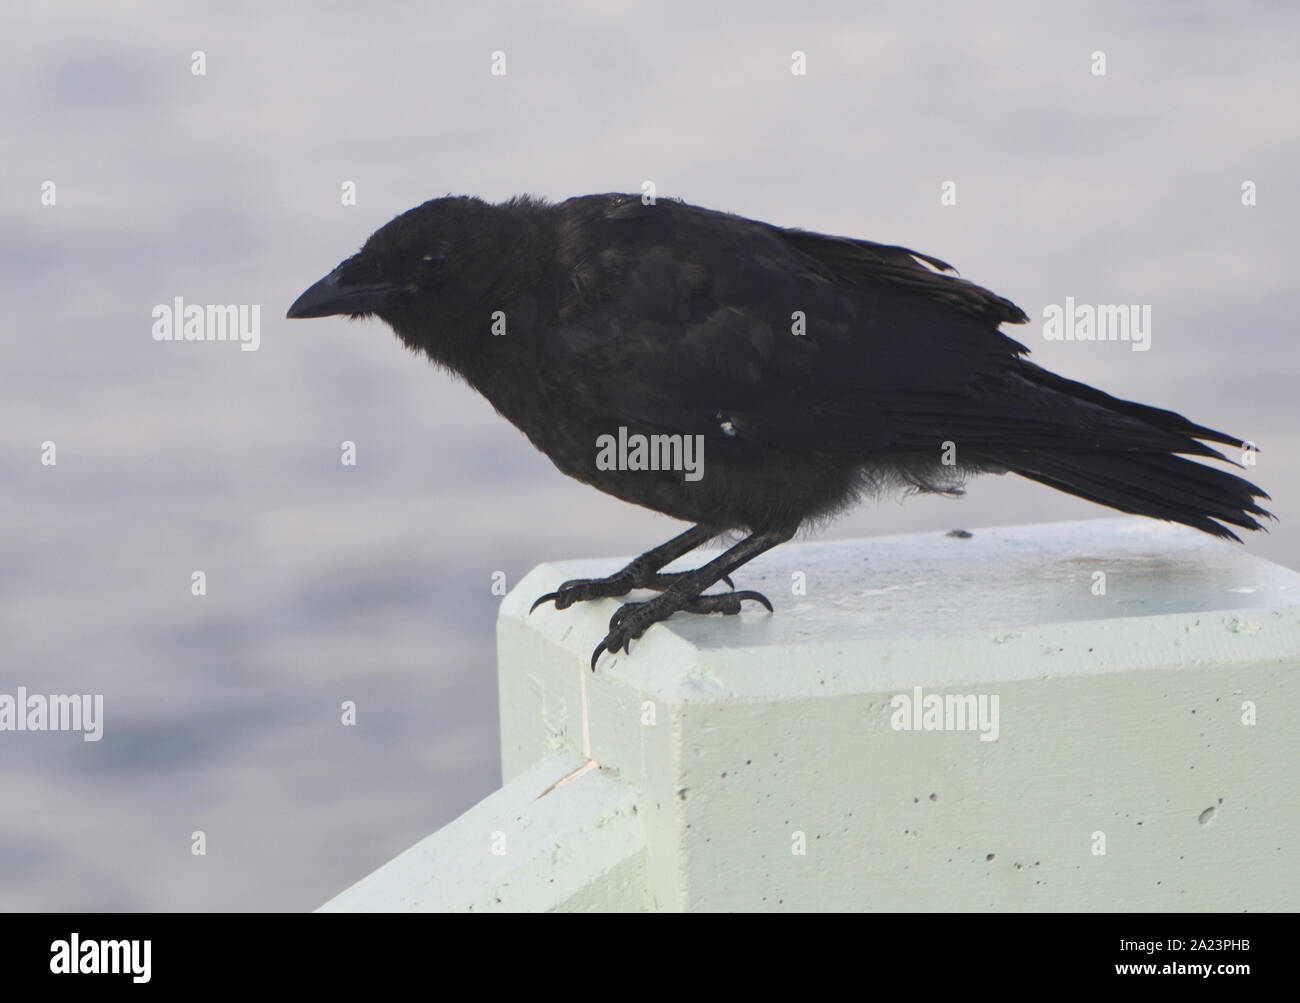 A northwestern crow (Corvus caurinus) on Victoria’s waterfront. Victoria, British Columbia, Canada. Stock Photo